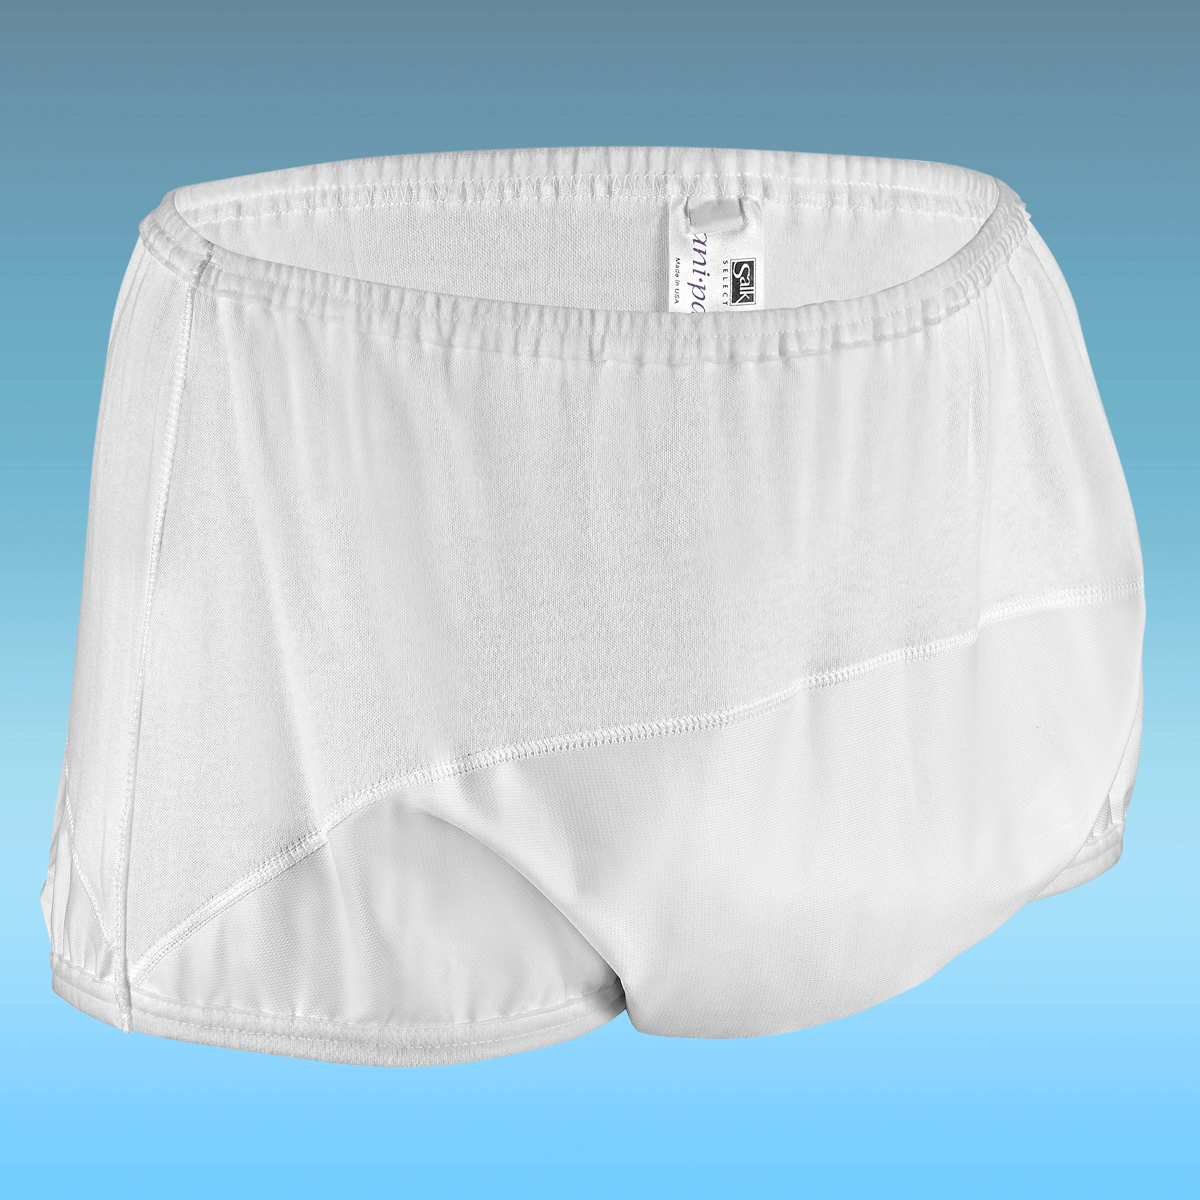 DMI Incontinent Pants, Pull-Up Waterproof Plastic Pants